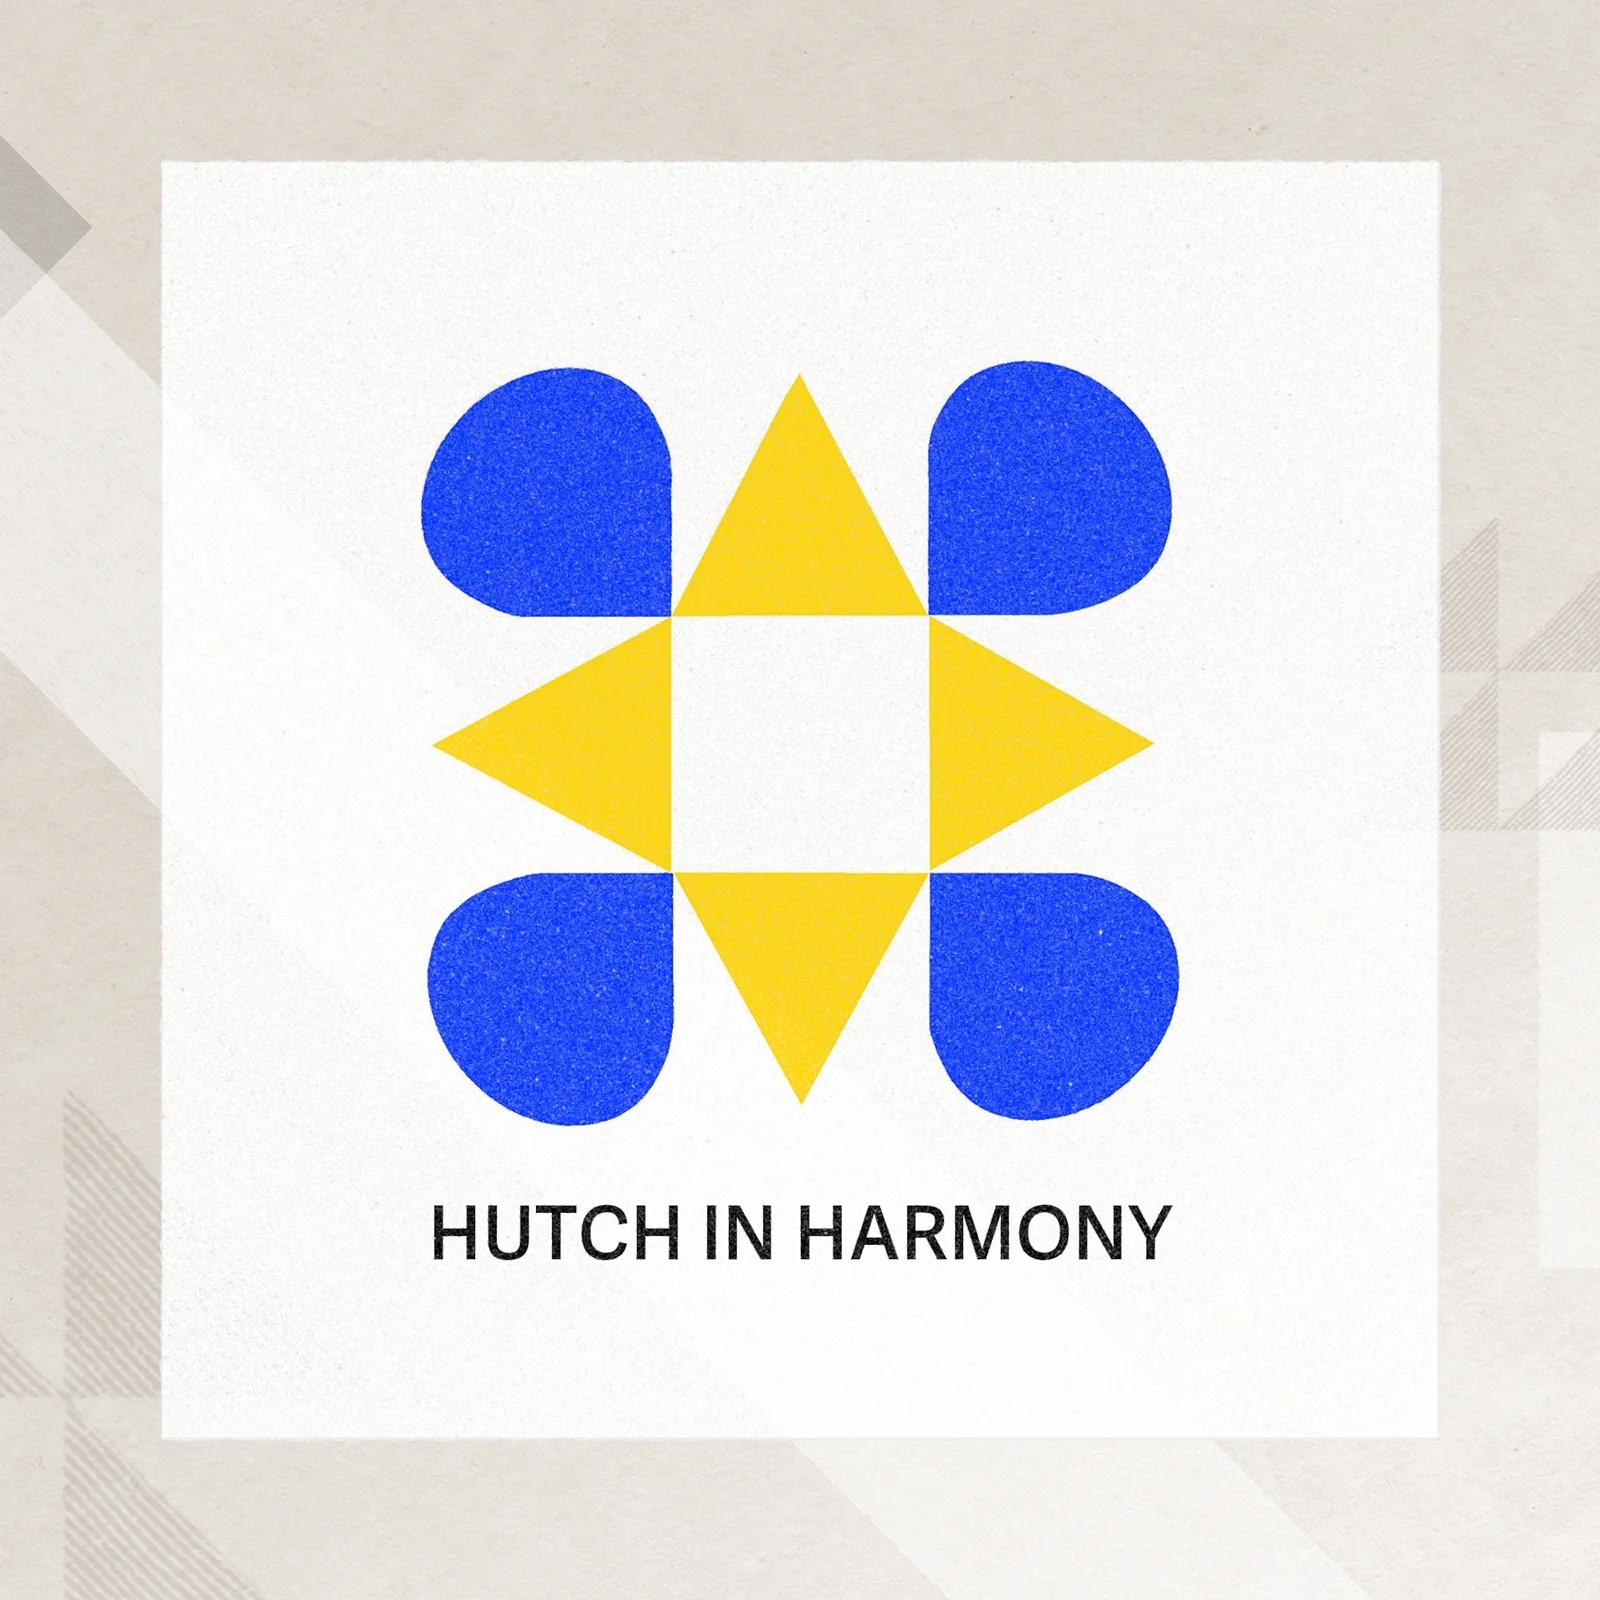 Hutch in Harmony